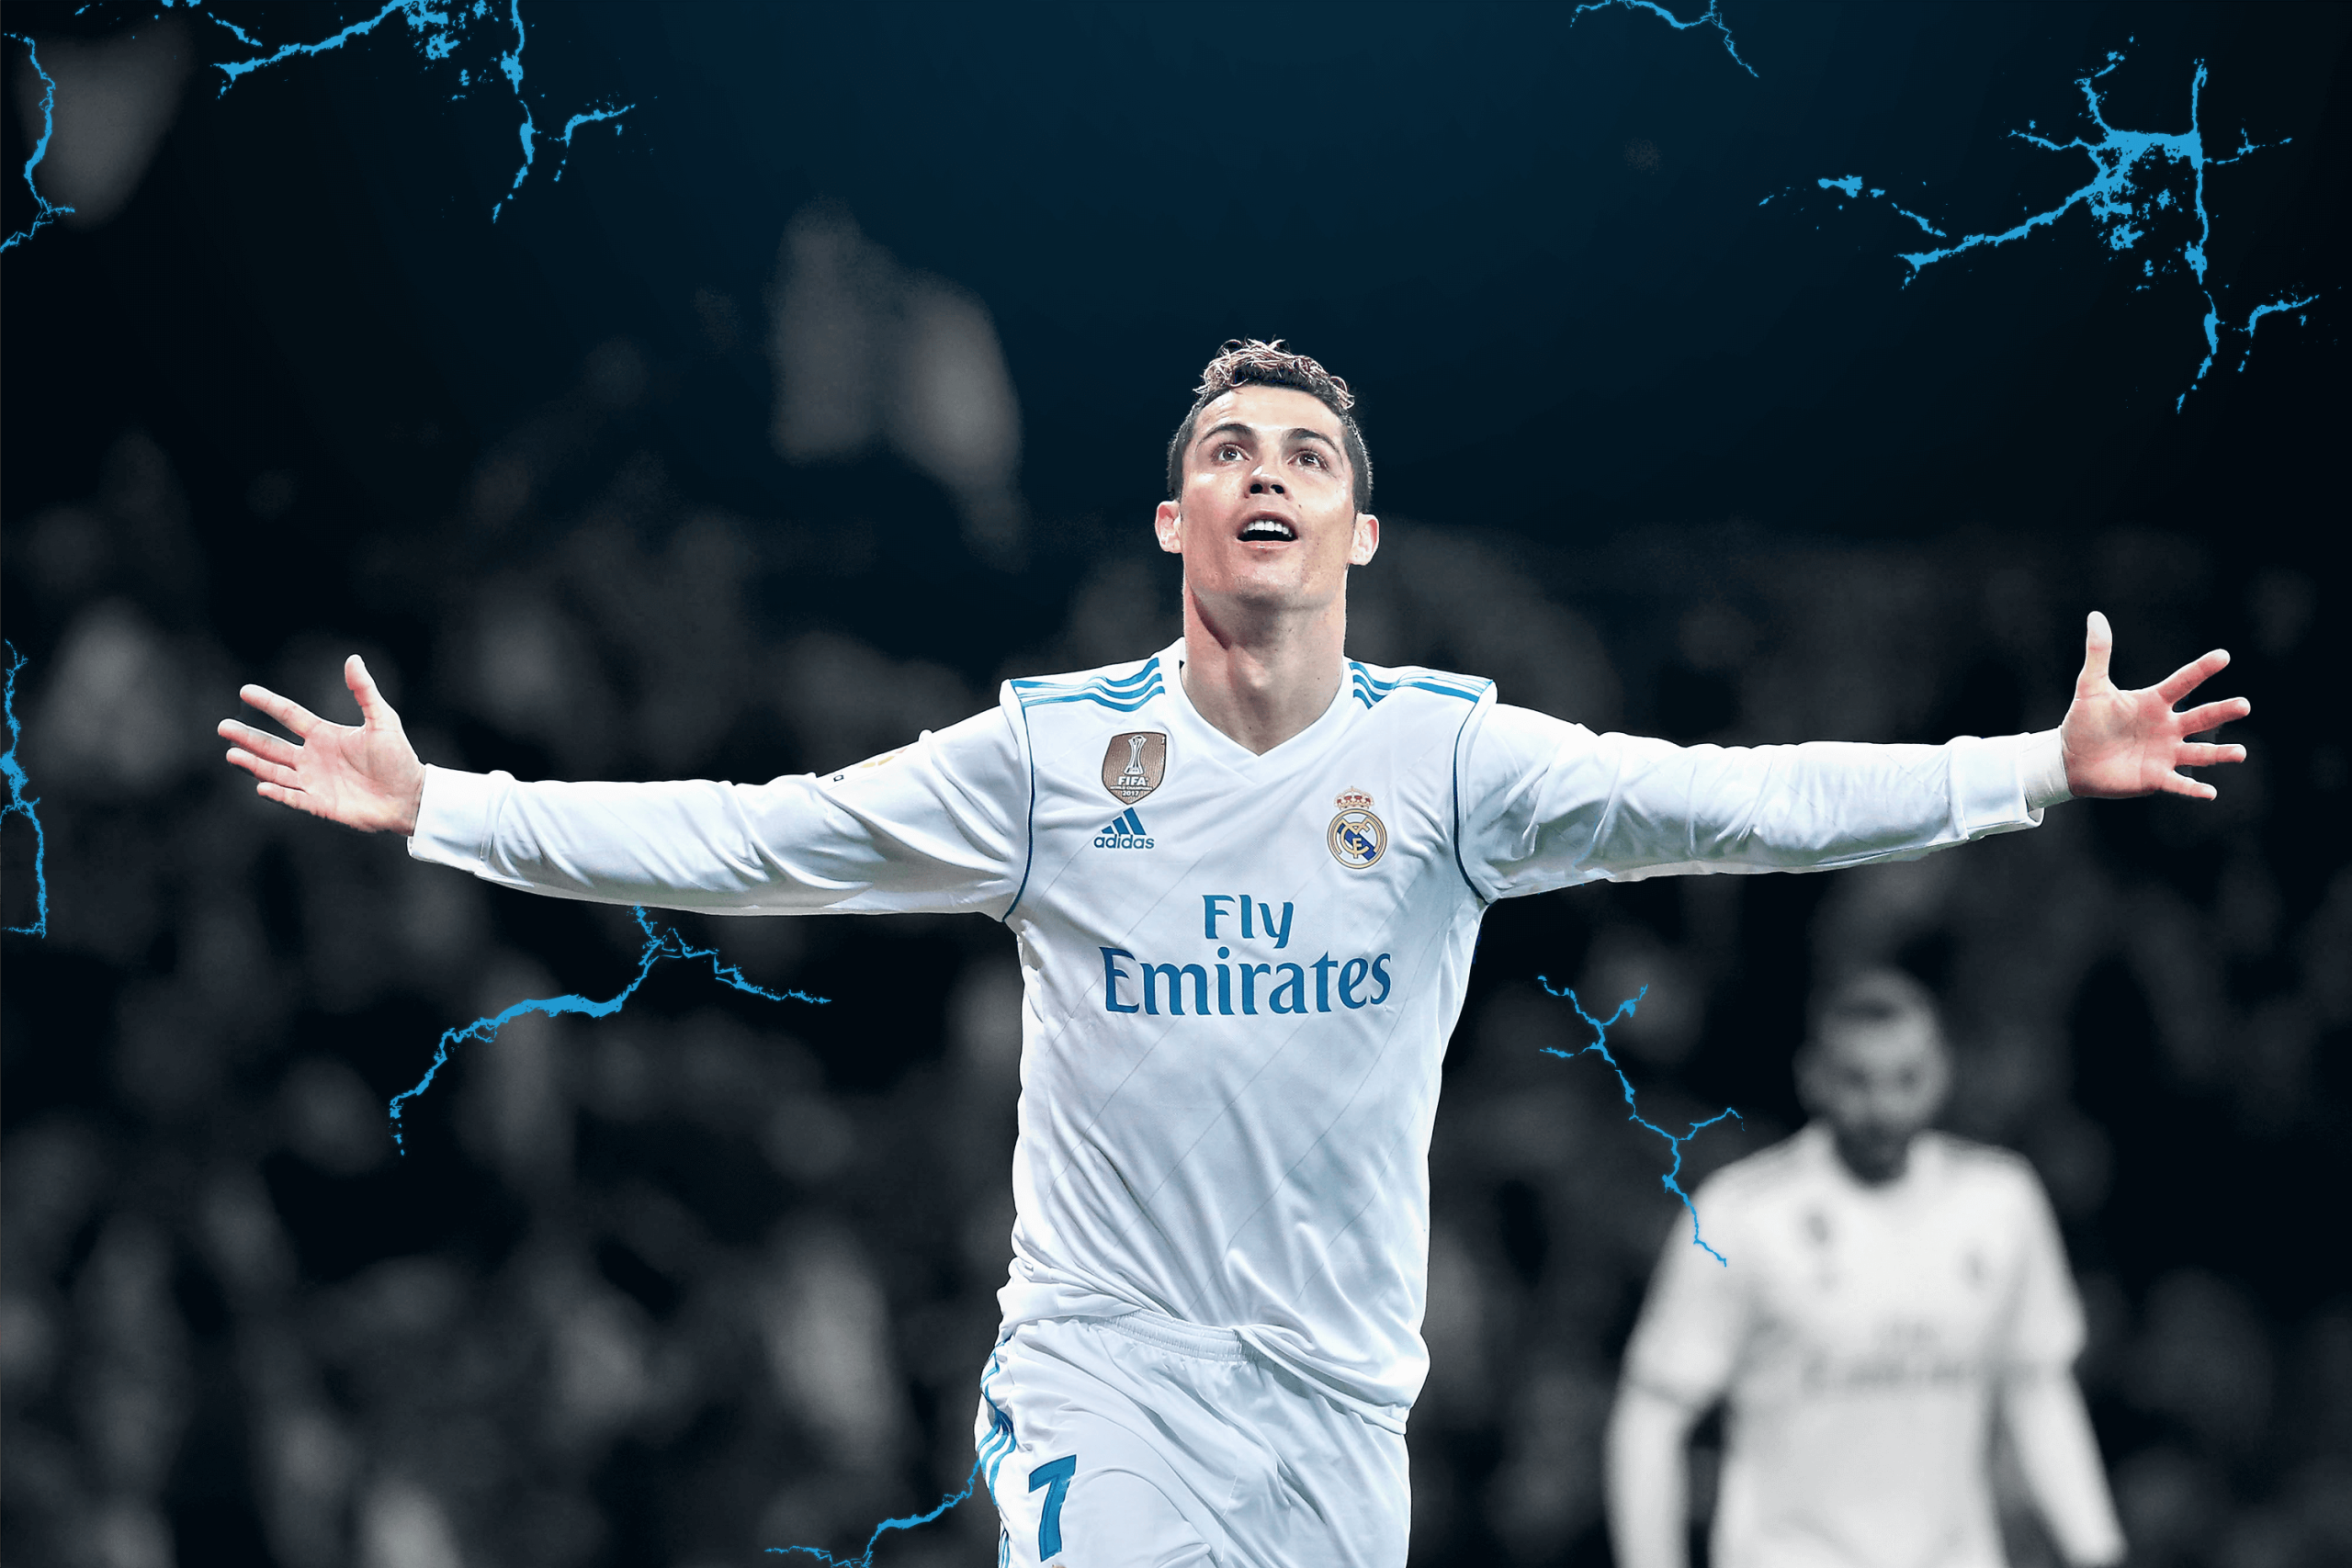 Cristiano Ronaldo - Legendary Skills & Goals for Man United (HD) on Make a  GIF